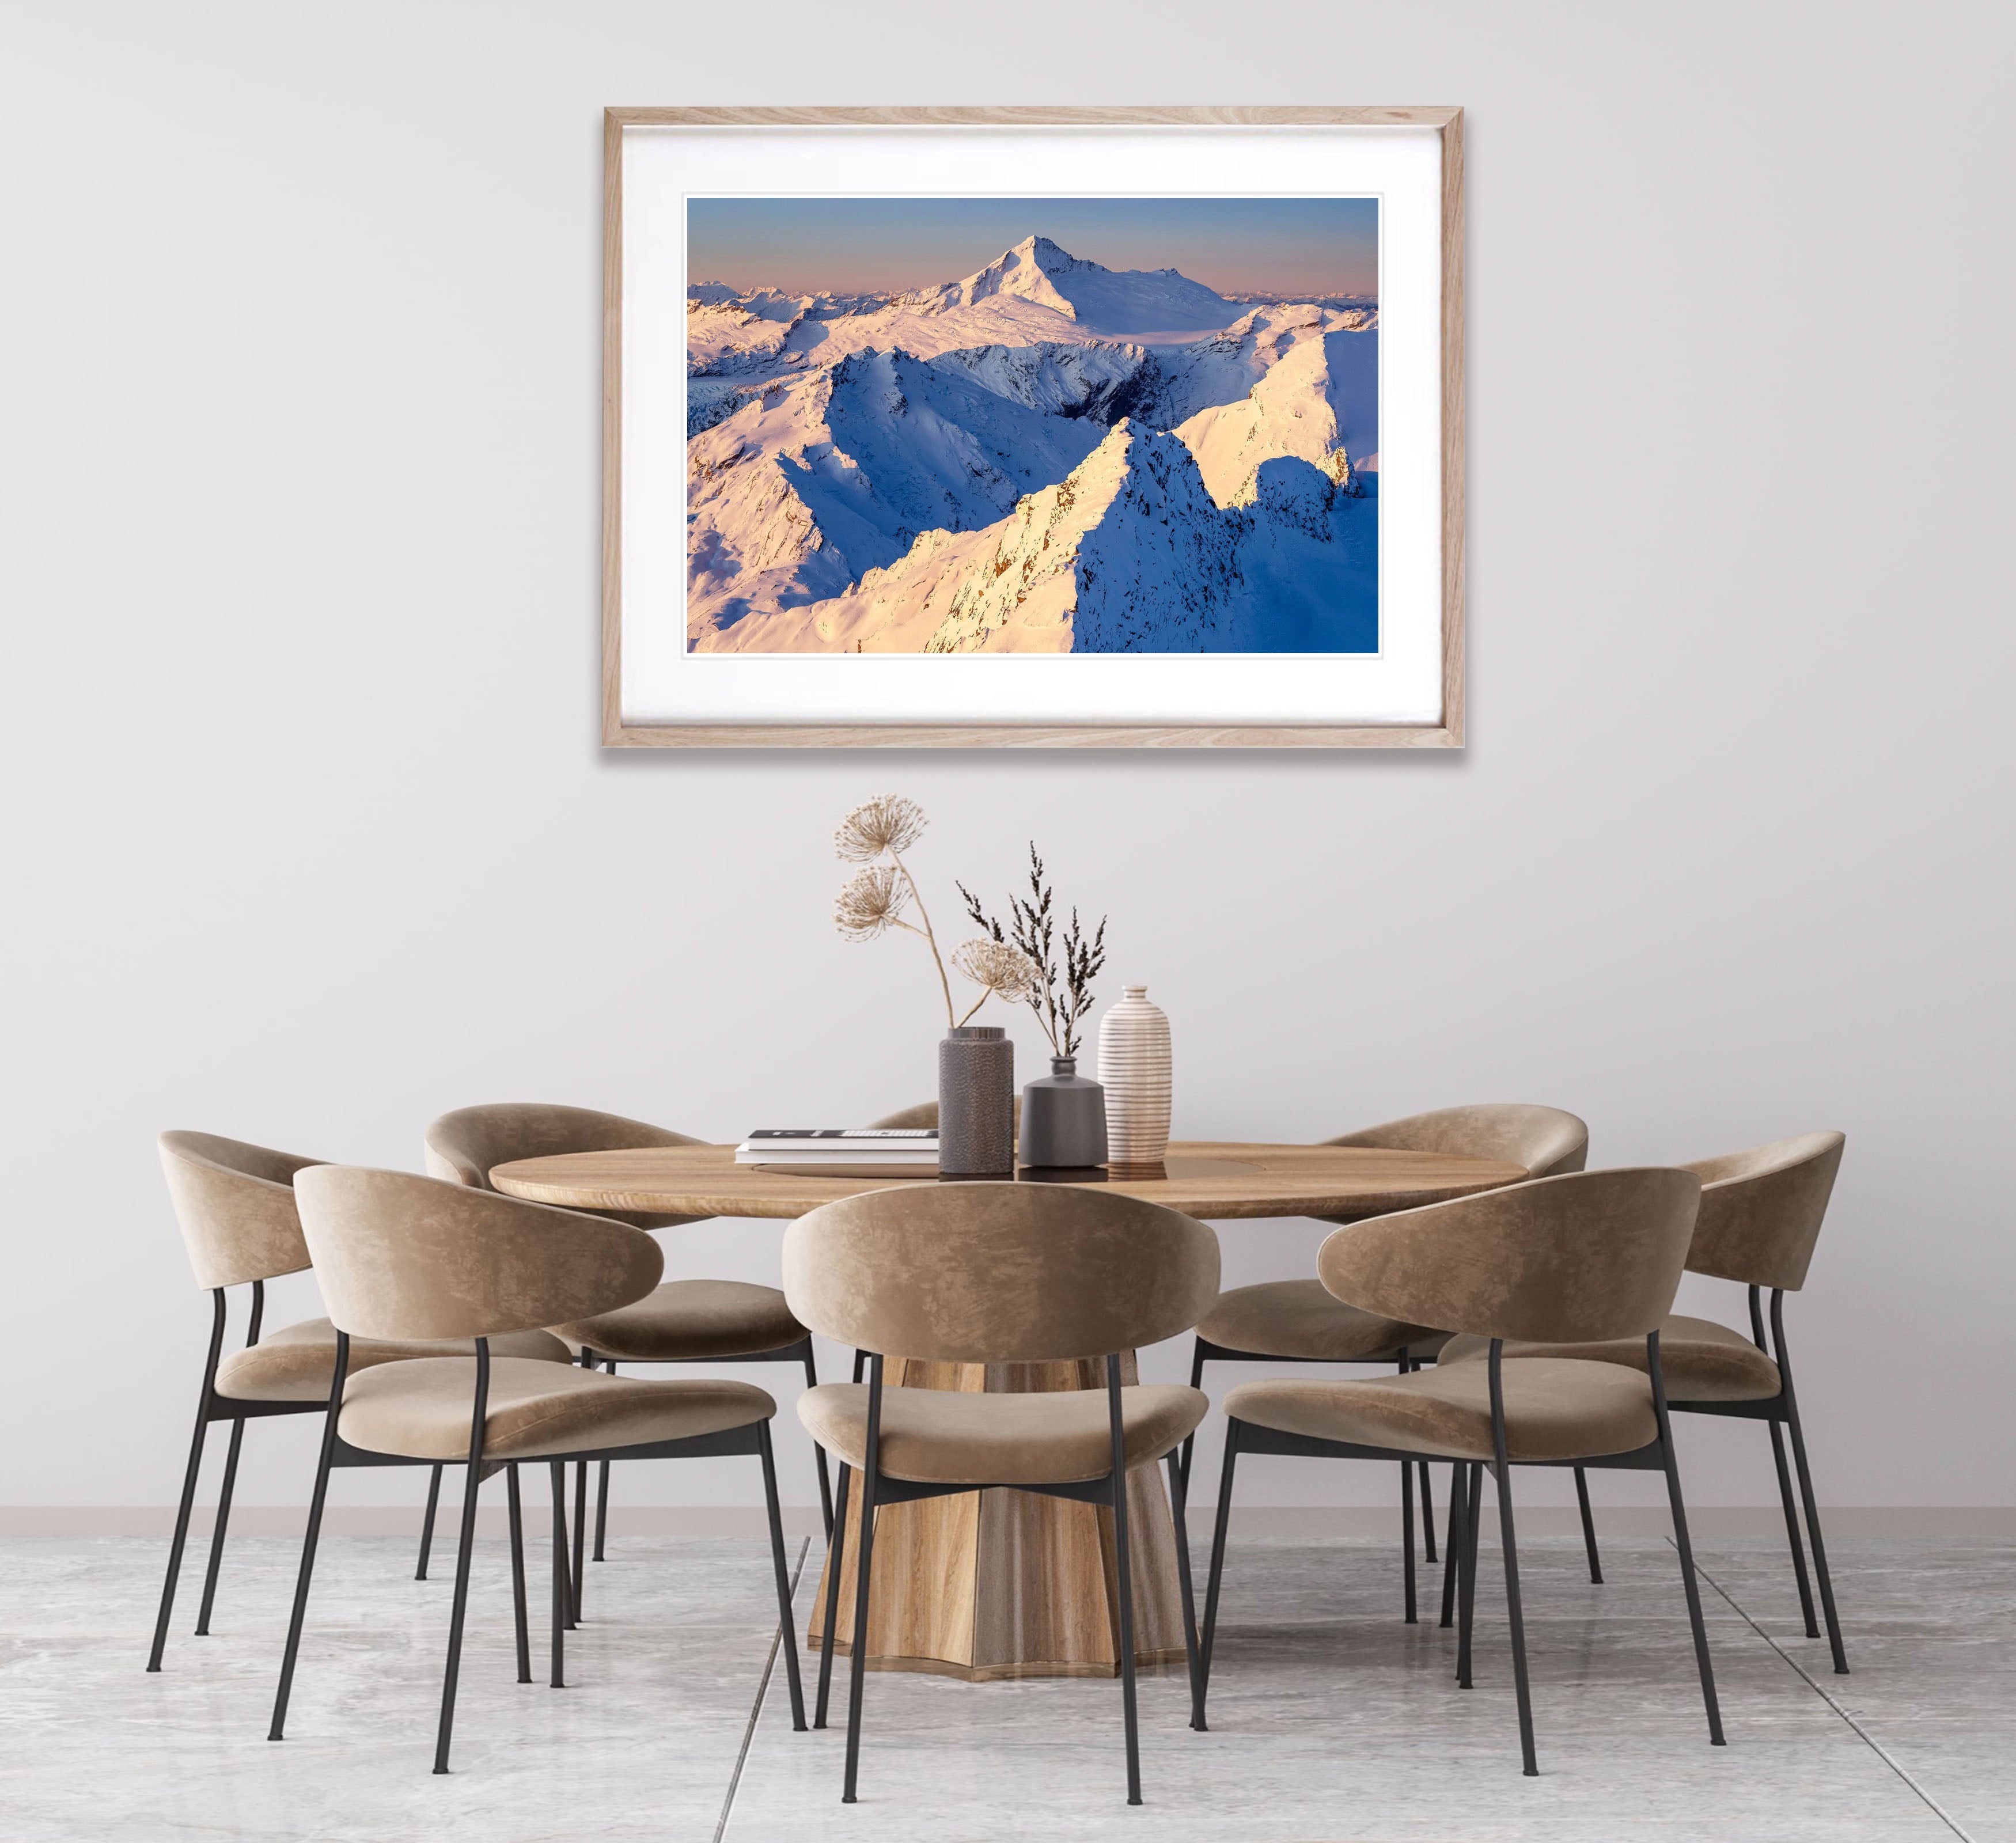 ARTWORK INSTOCK - The Southern Alps, New Zealand - 150x 100cms Canvas Print Raw Oak